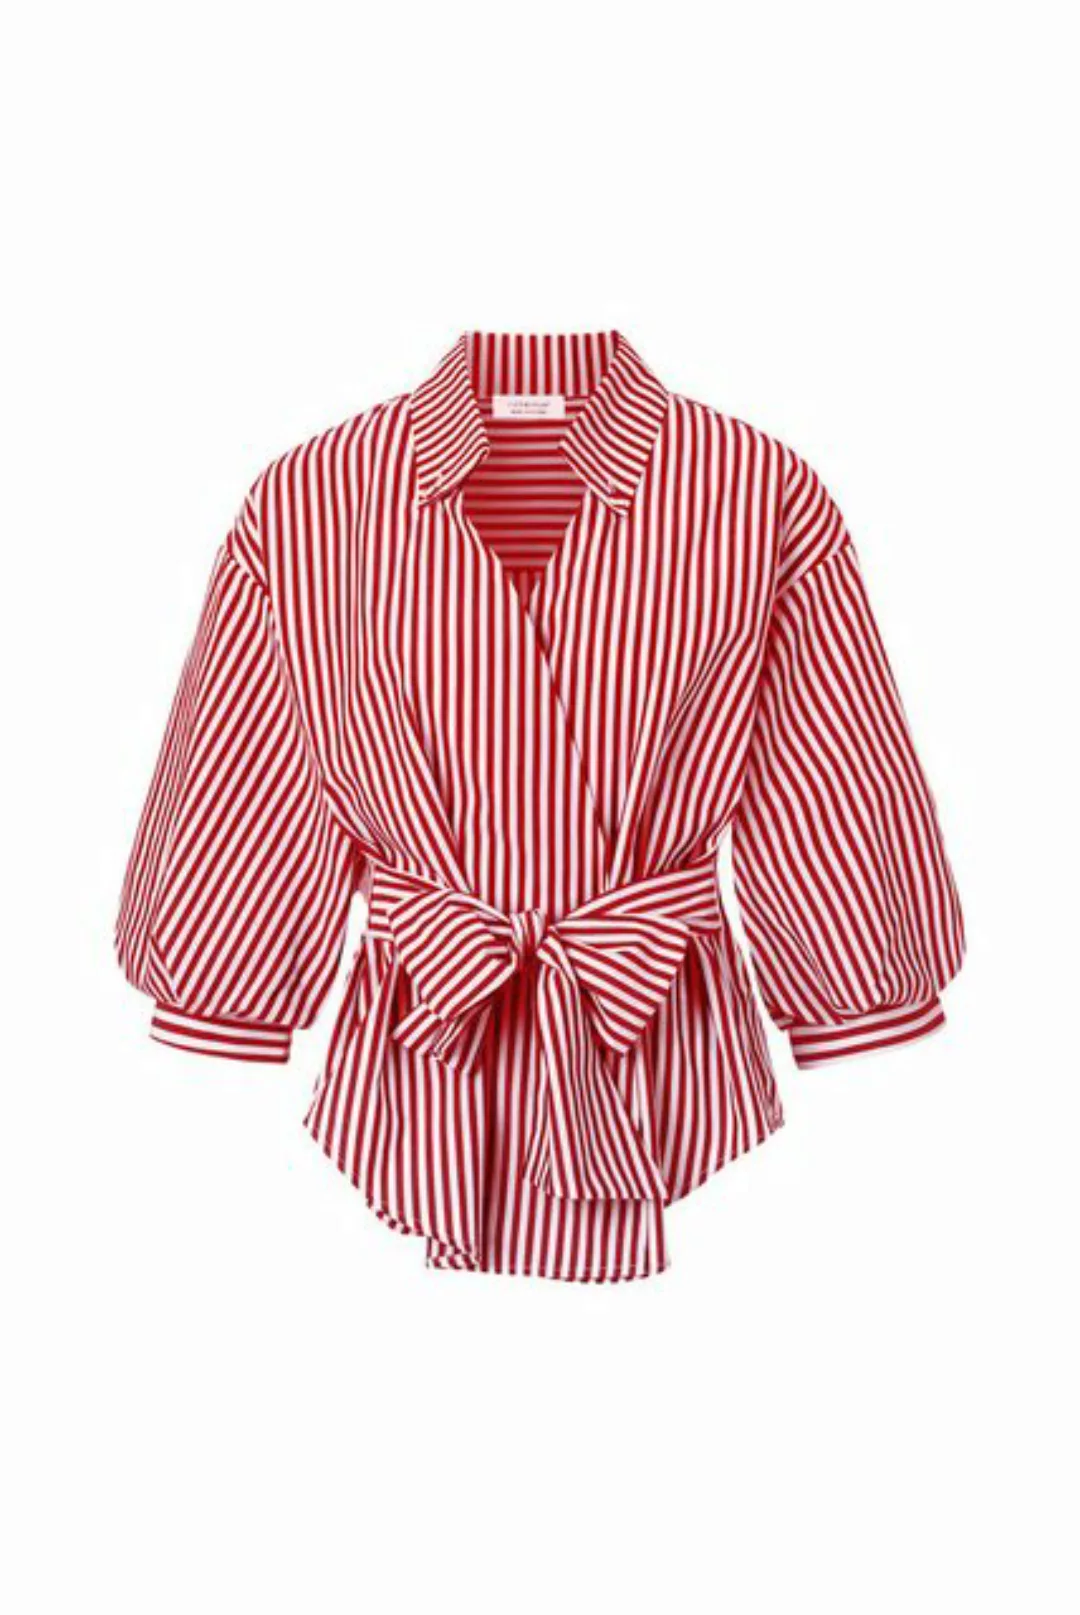 Rich & Royal Blusenshirt Striped blouse with puffed sleeves, cherry tomato günstig online kaufen